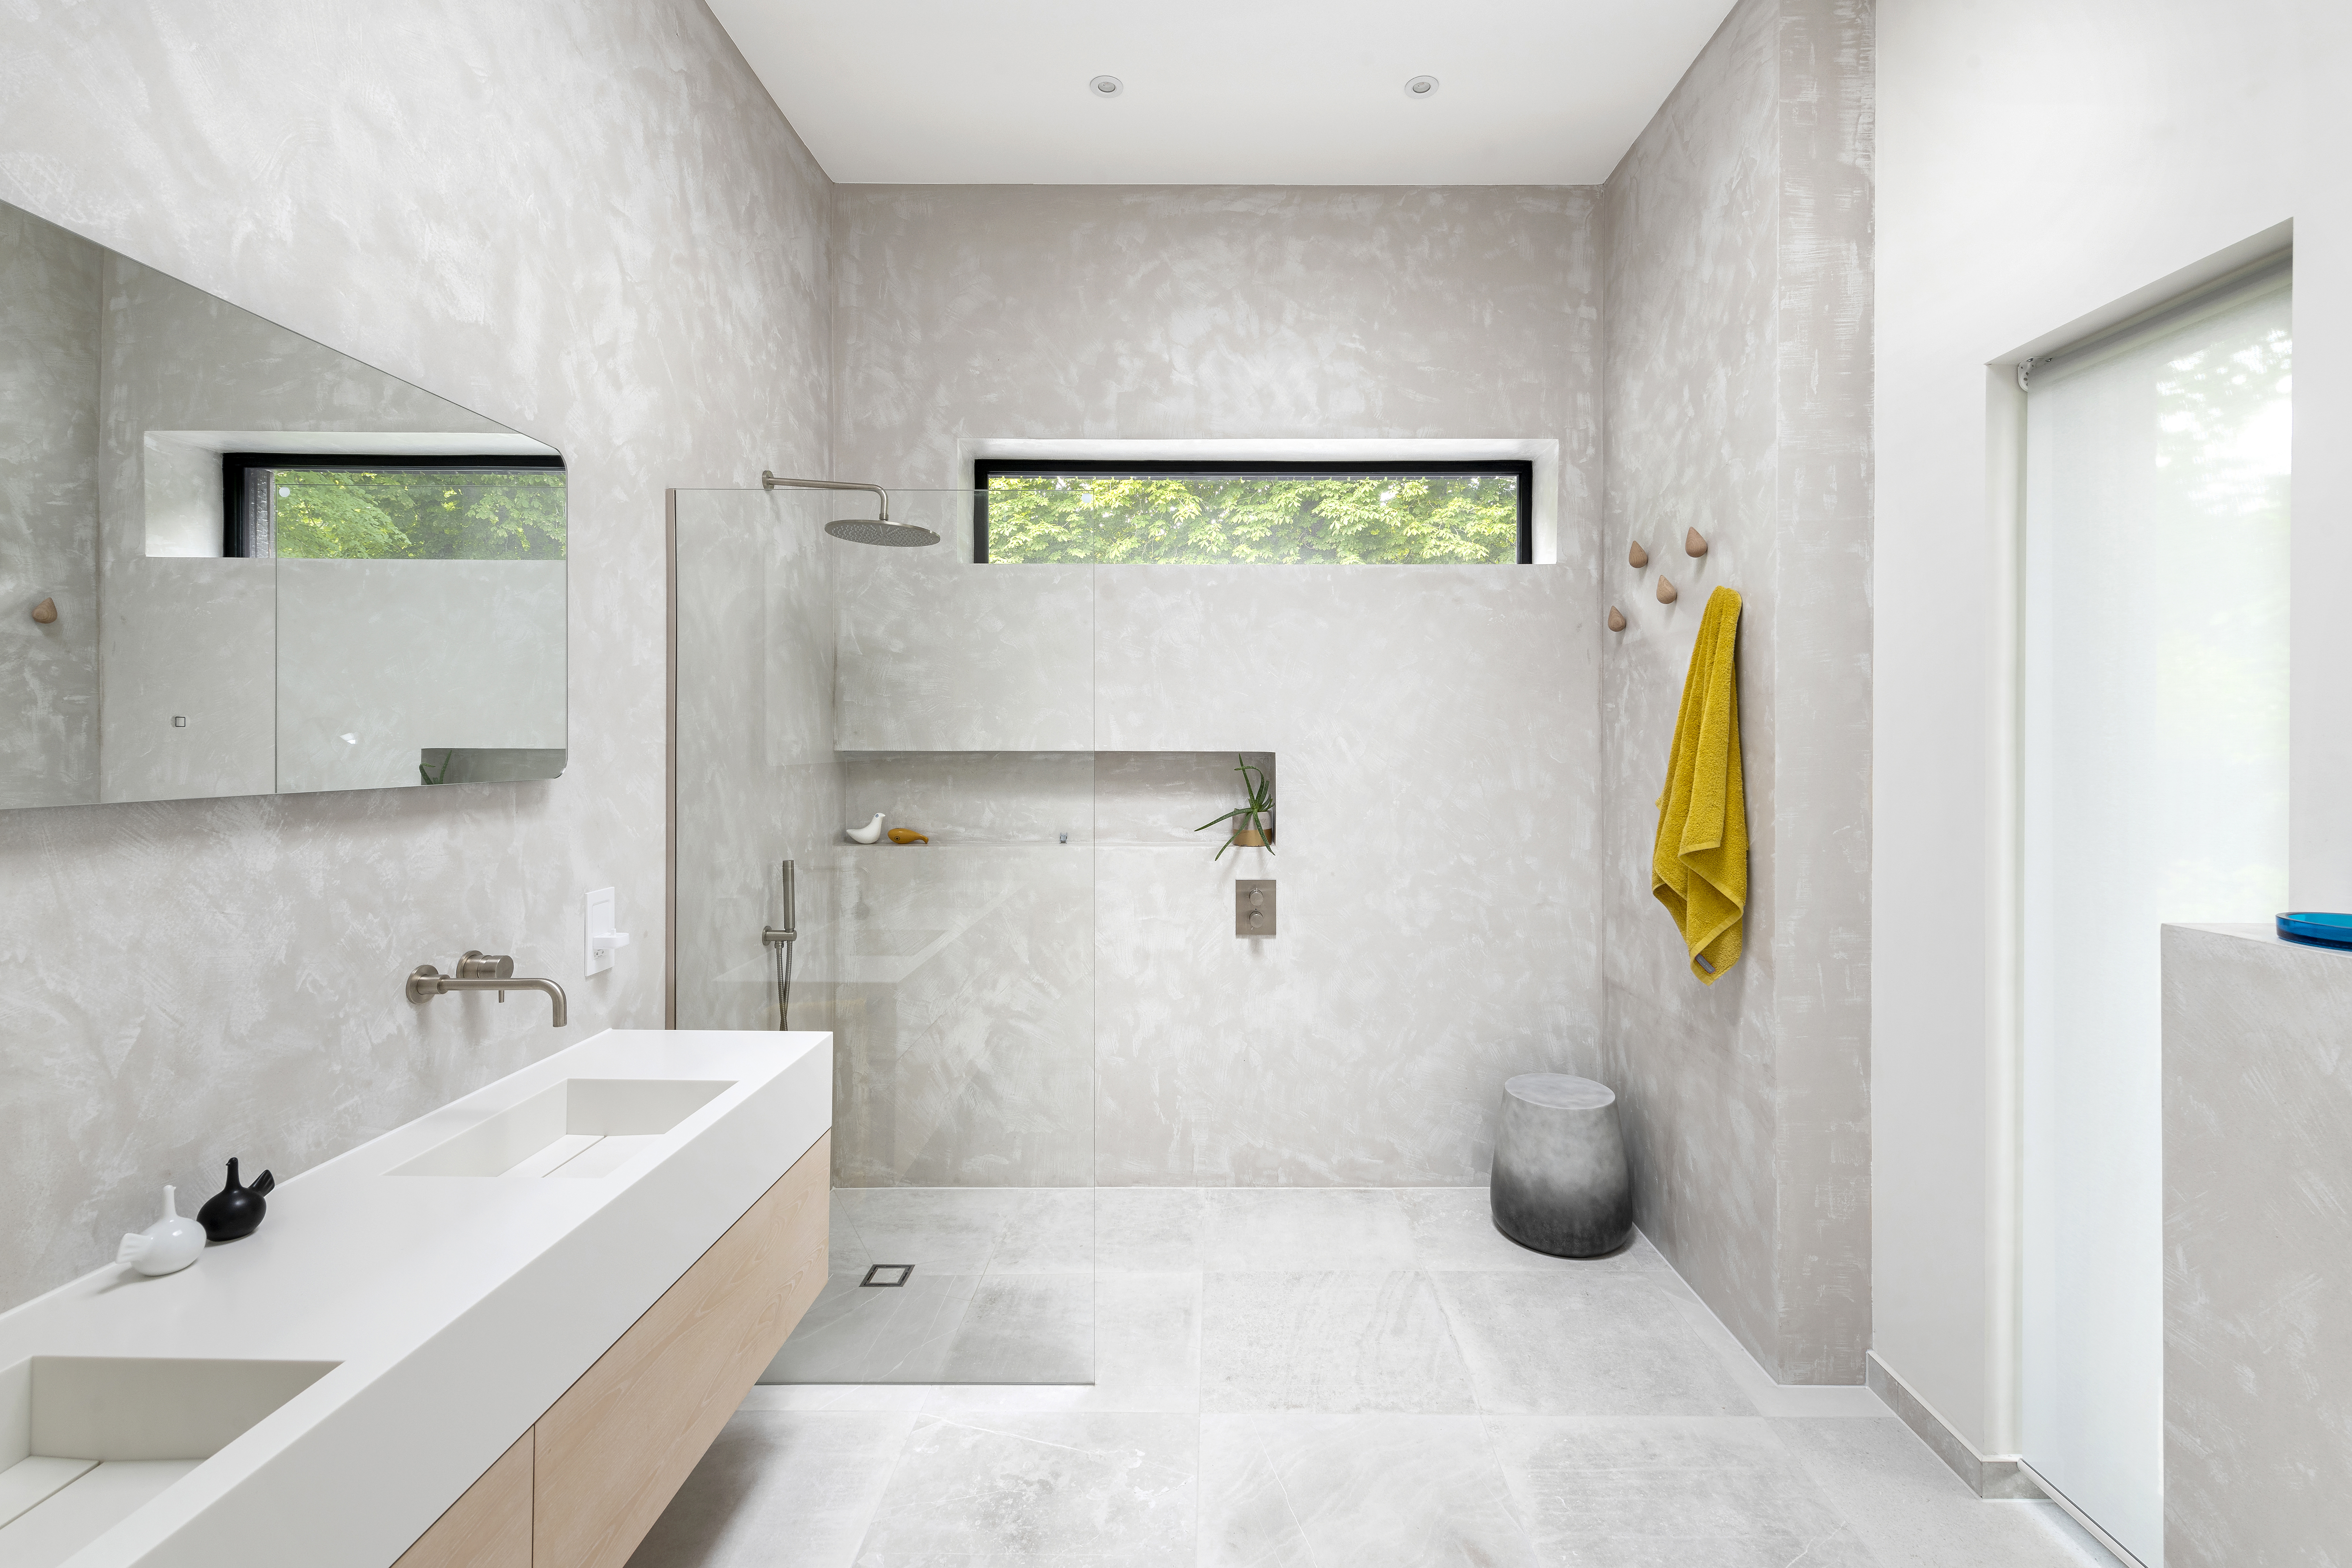 Microcement bathroom walls, Corian bespoke vanity